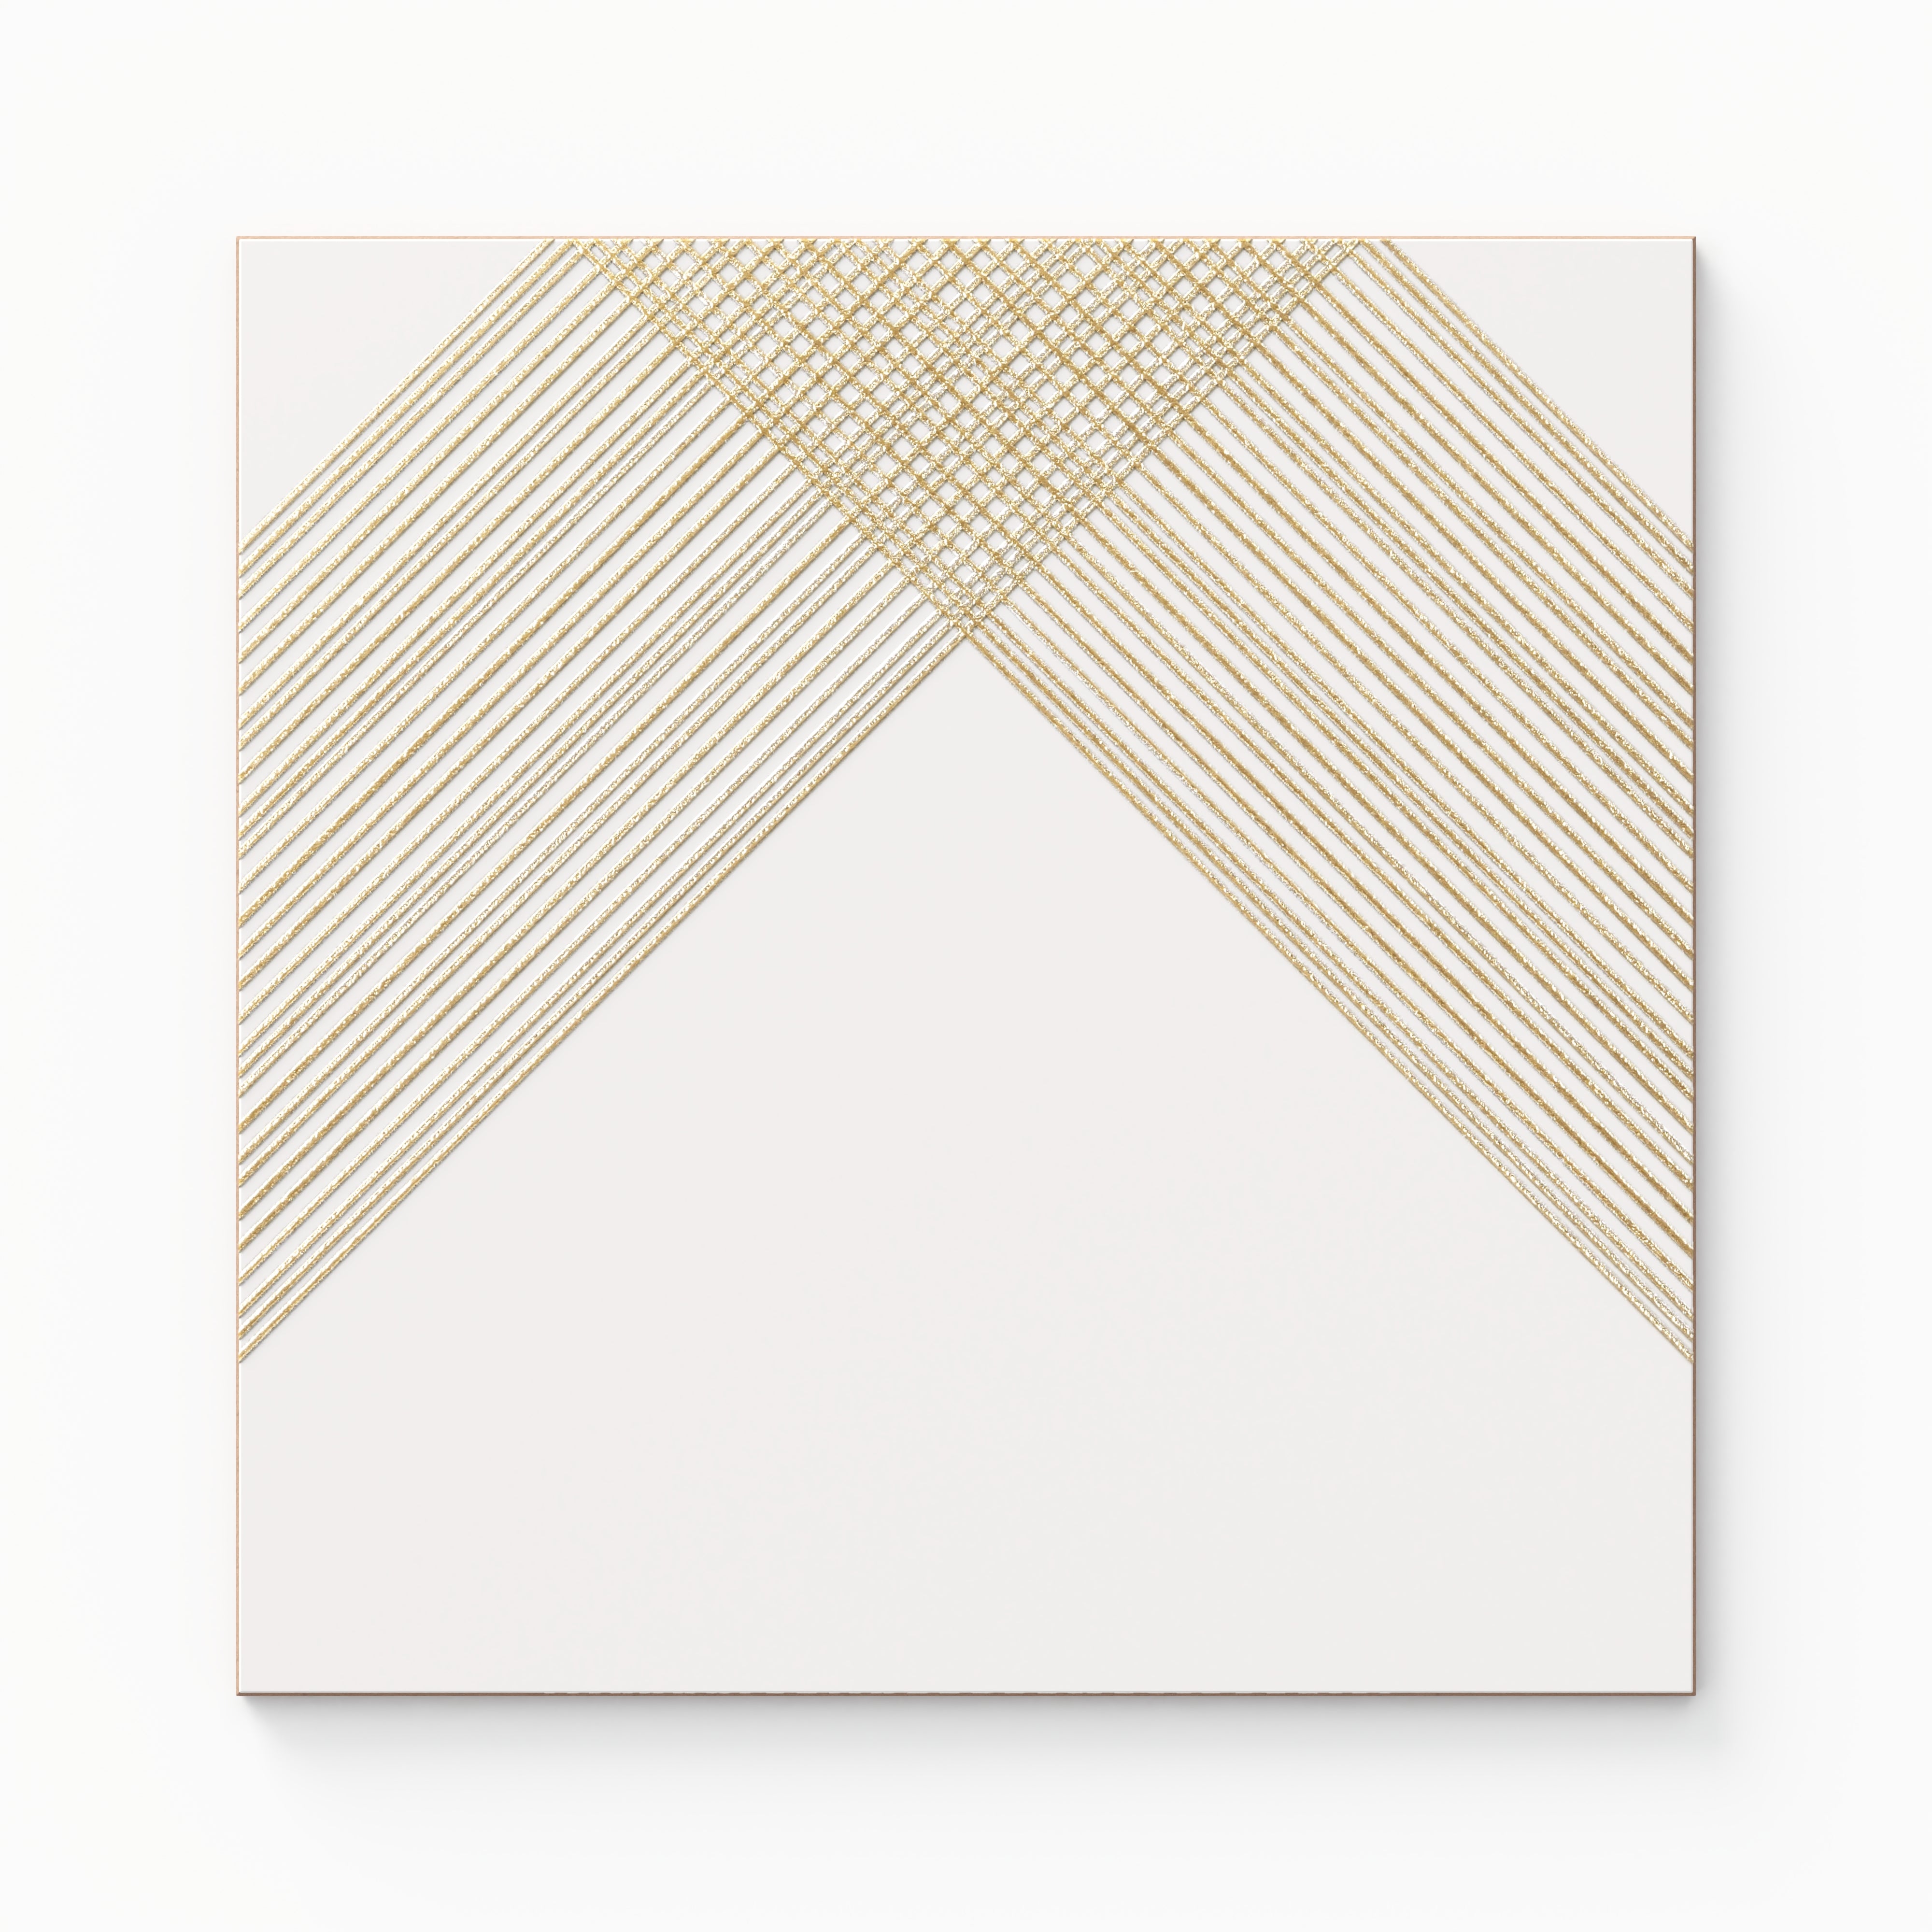 Estelle 12x12 Satin Ceramic Tile in Deco 2 White Gold